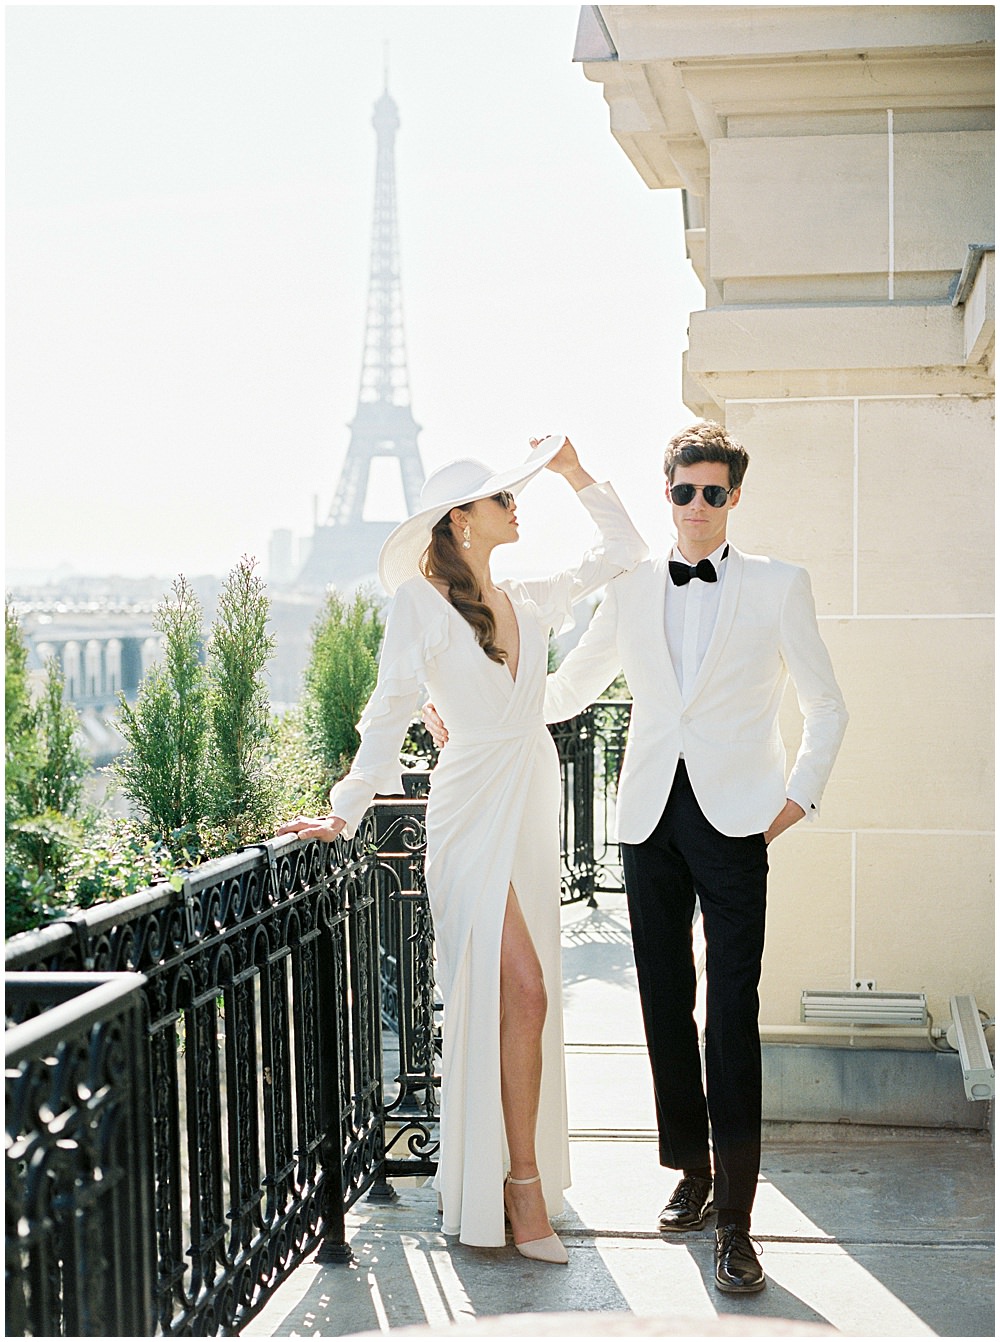 Top 10 Paris Wedding Photography Locations, Plaza Atheneé Hotel, hotel balcony with eiffel tower, 